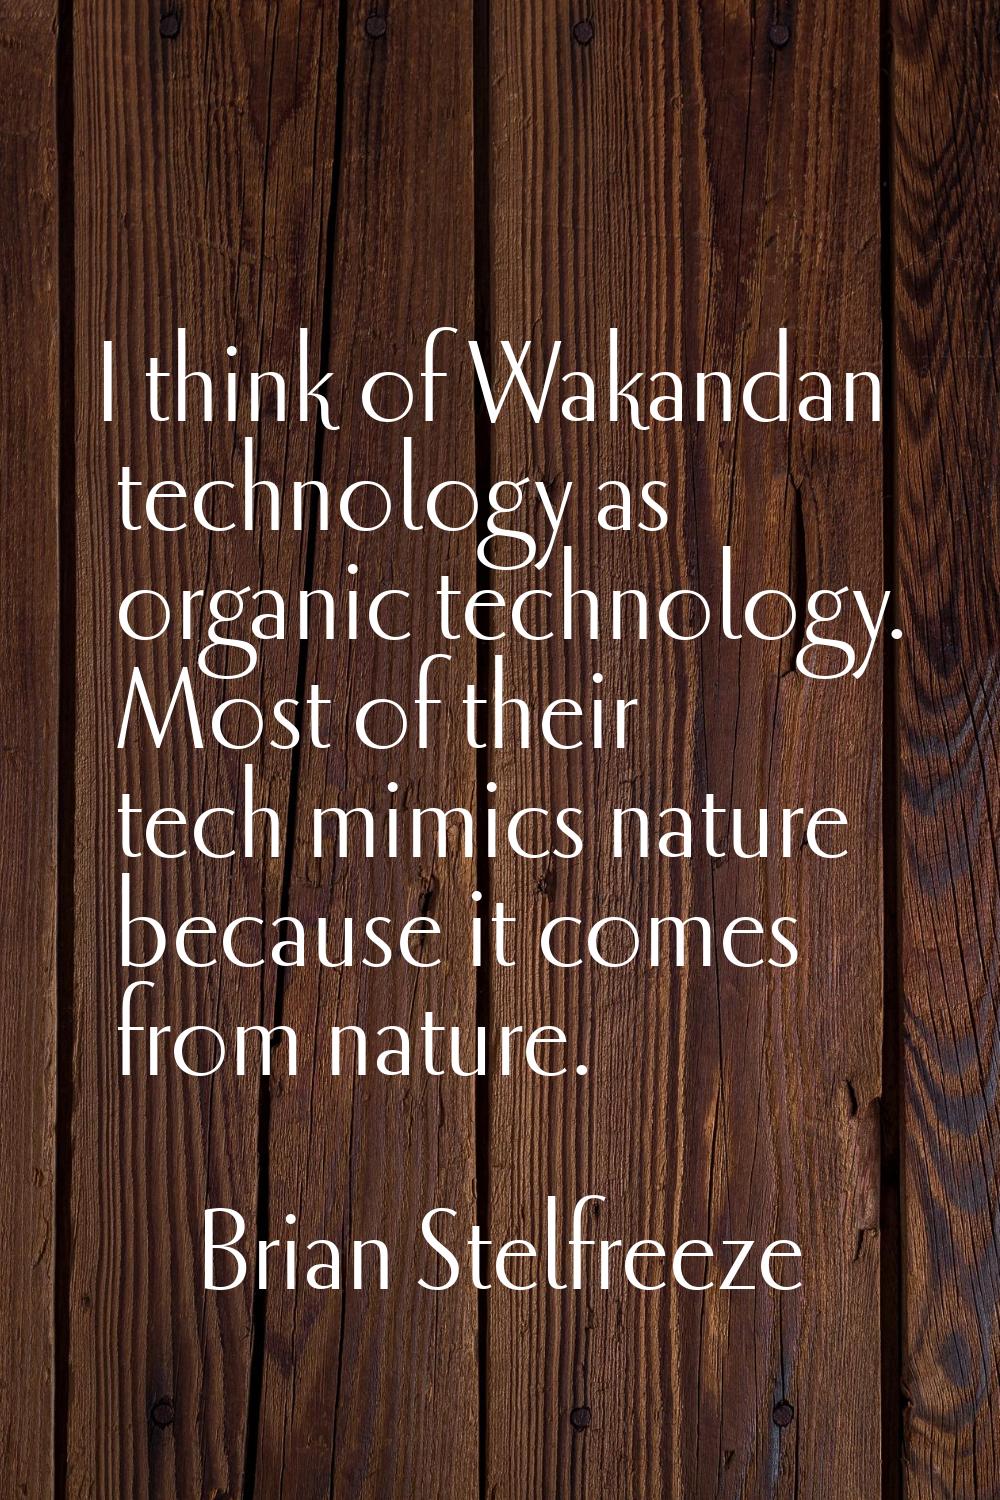 I think of Wakandan technology as organic technology. Most of their tech mimics nature because it c